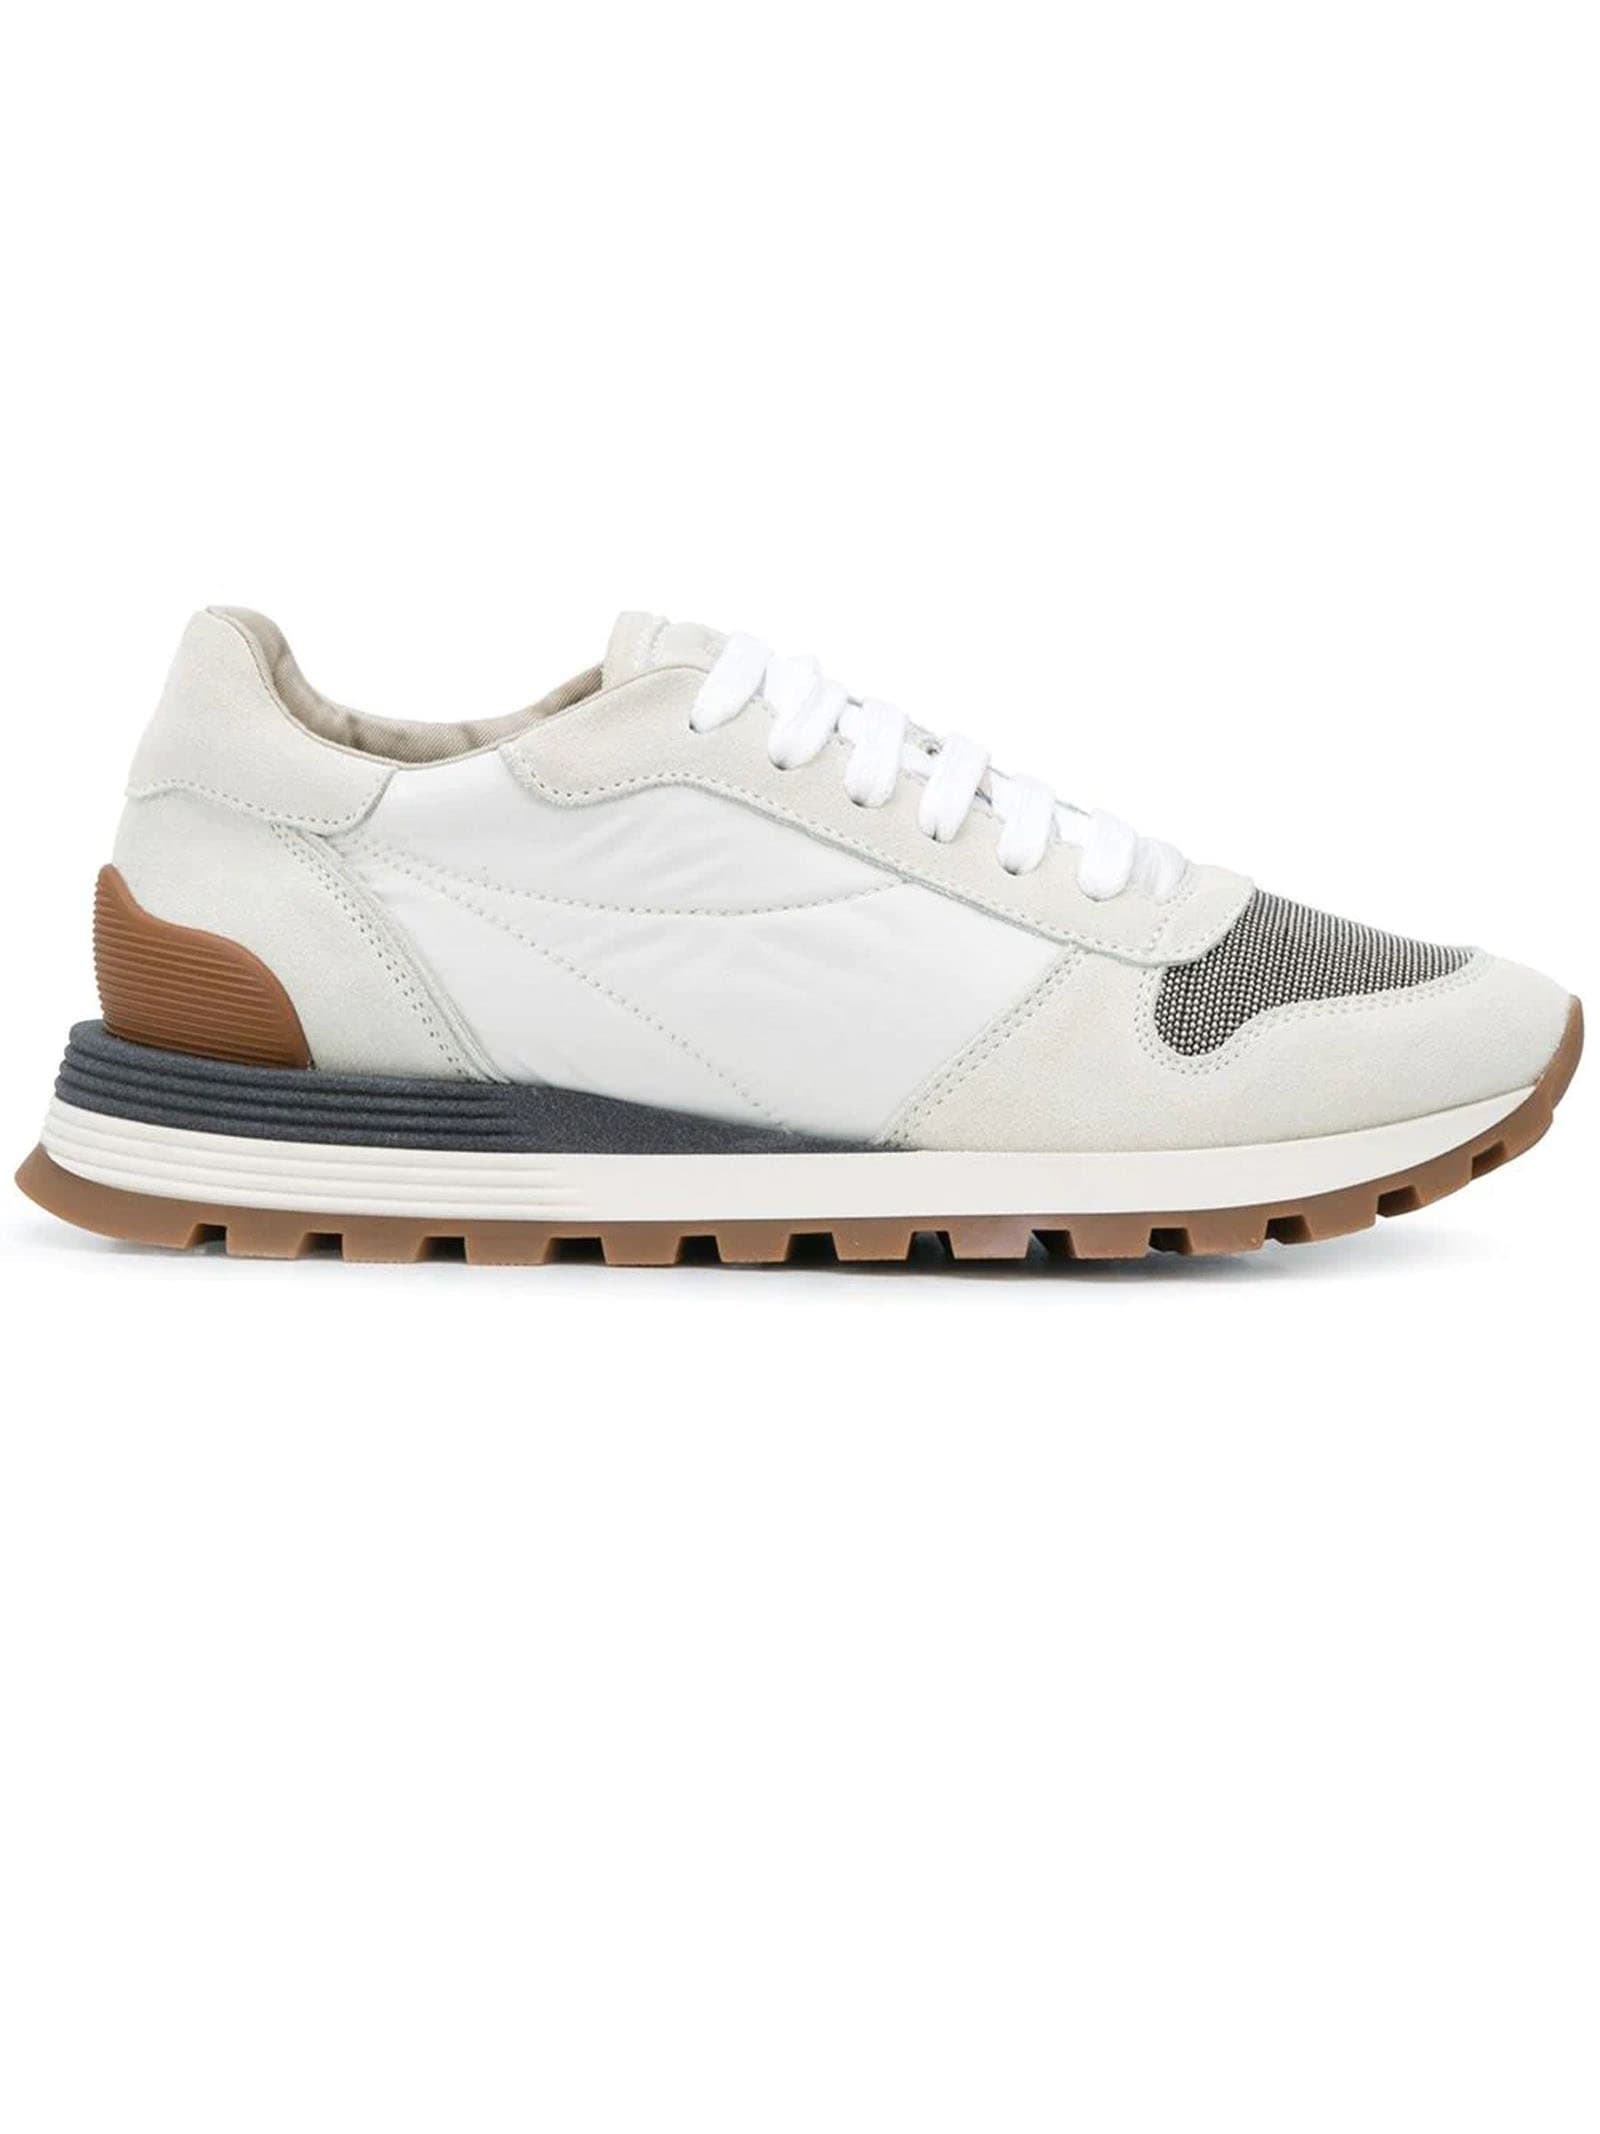 Brunello Cucinelli White Leather And Nylon Sneakers